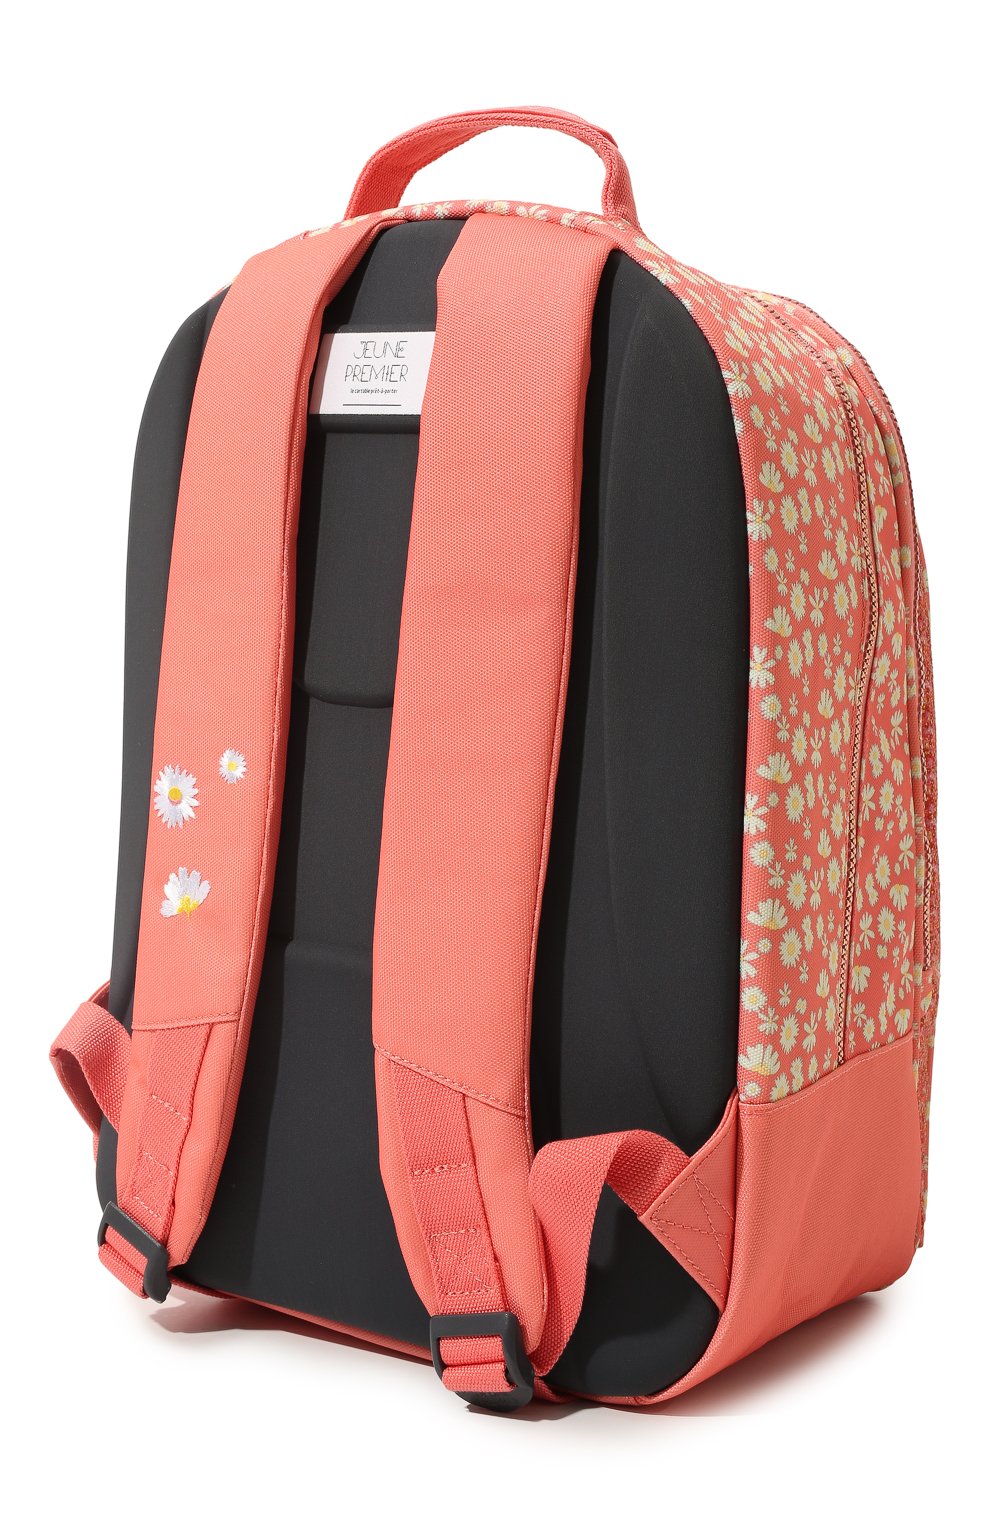 Детская рюкзак miss daisy JEUNE PREMIER розового цвета, арт. Bj021166 | Фото 2 (Материал: Текстиль)